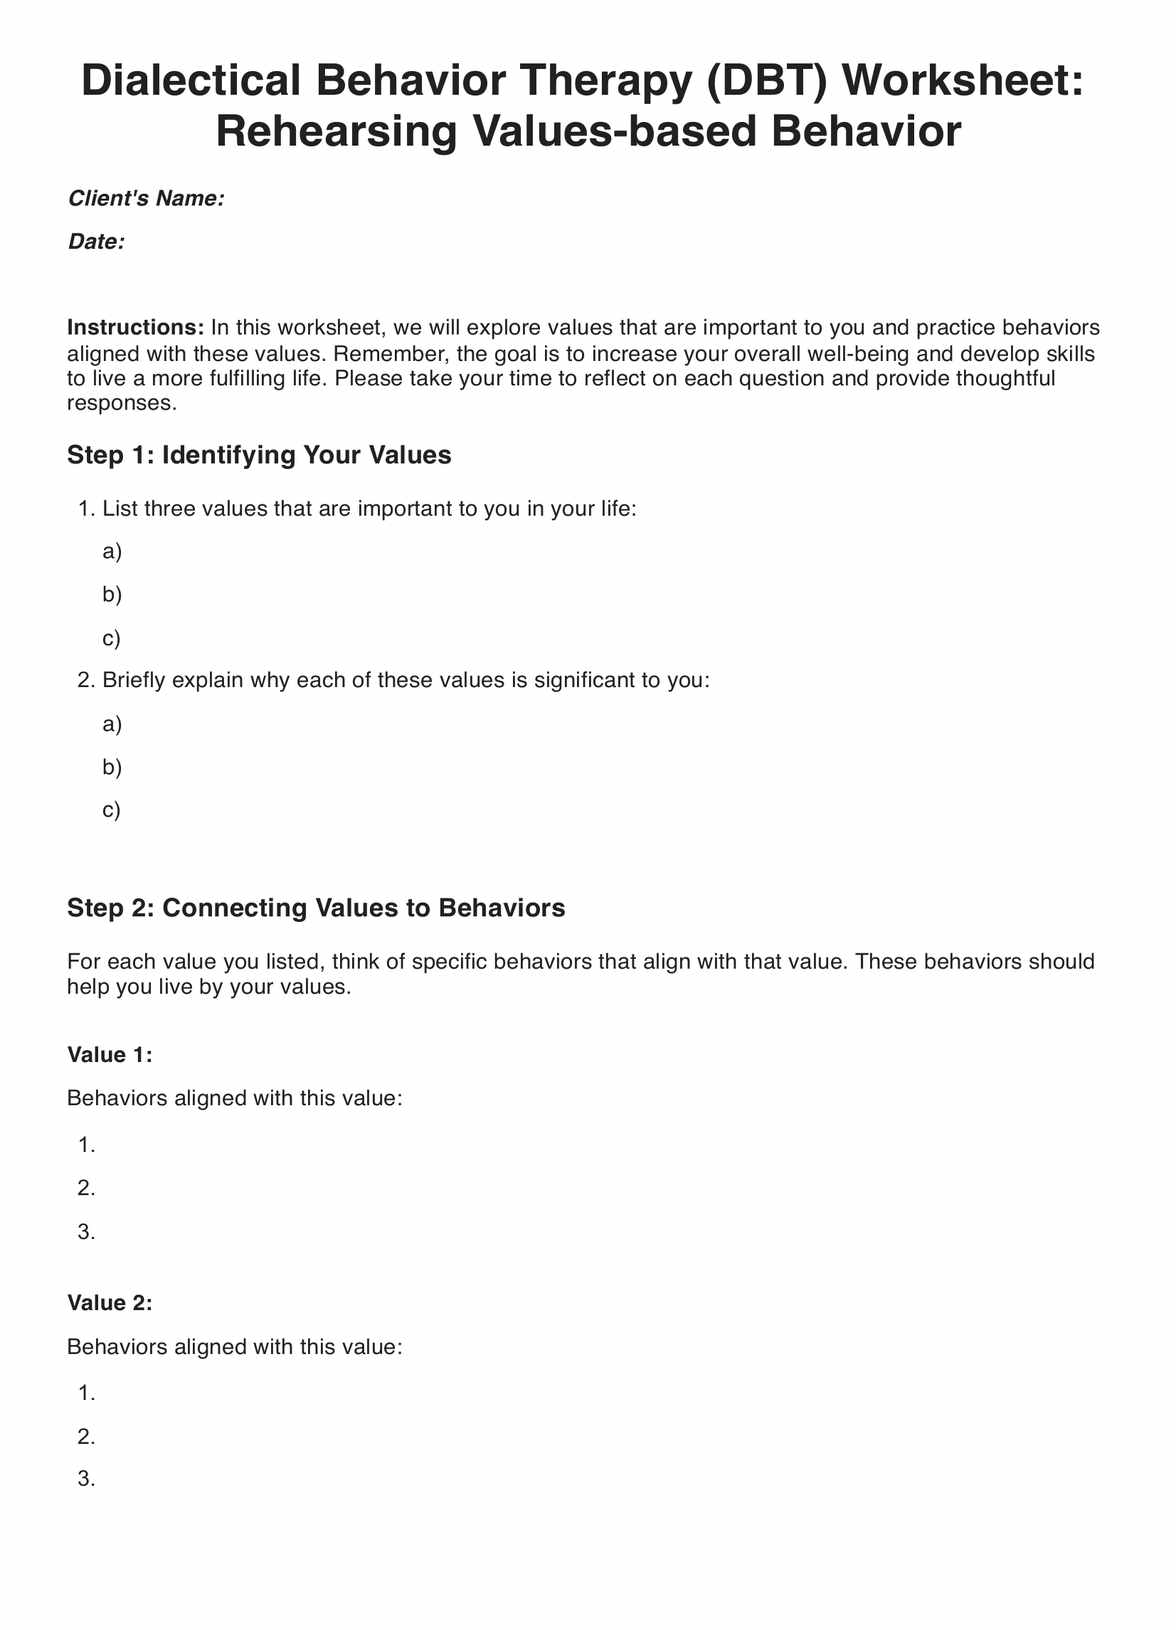 Rehearsing Values-based Behavior DBT Worksheet PDF Example